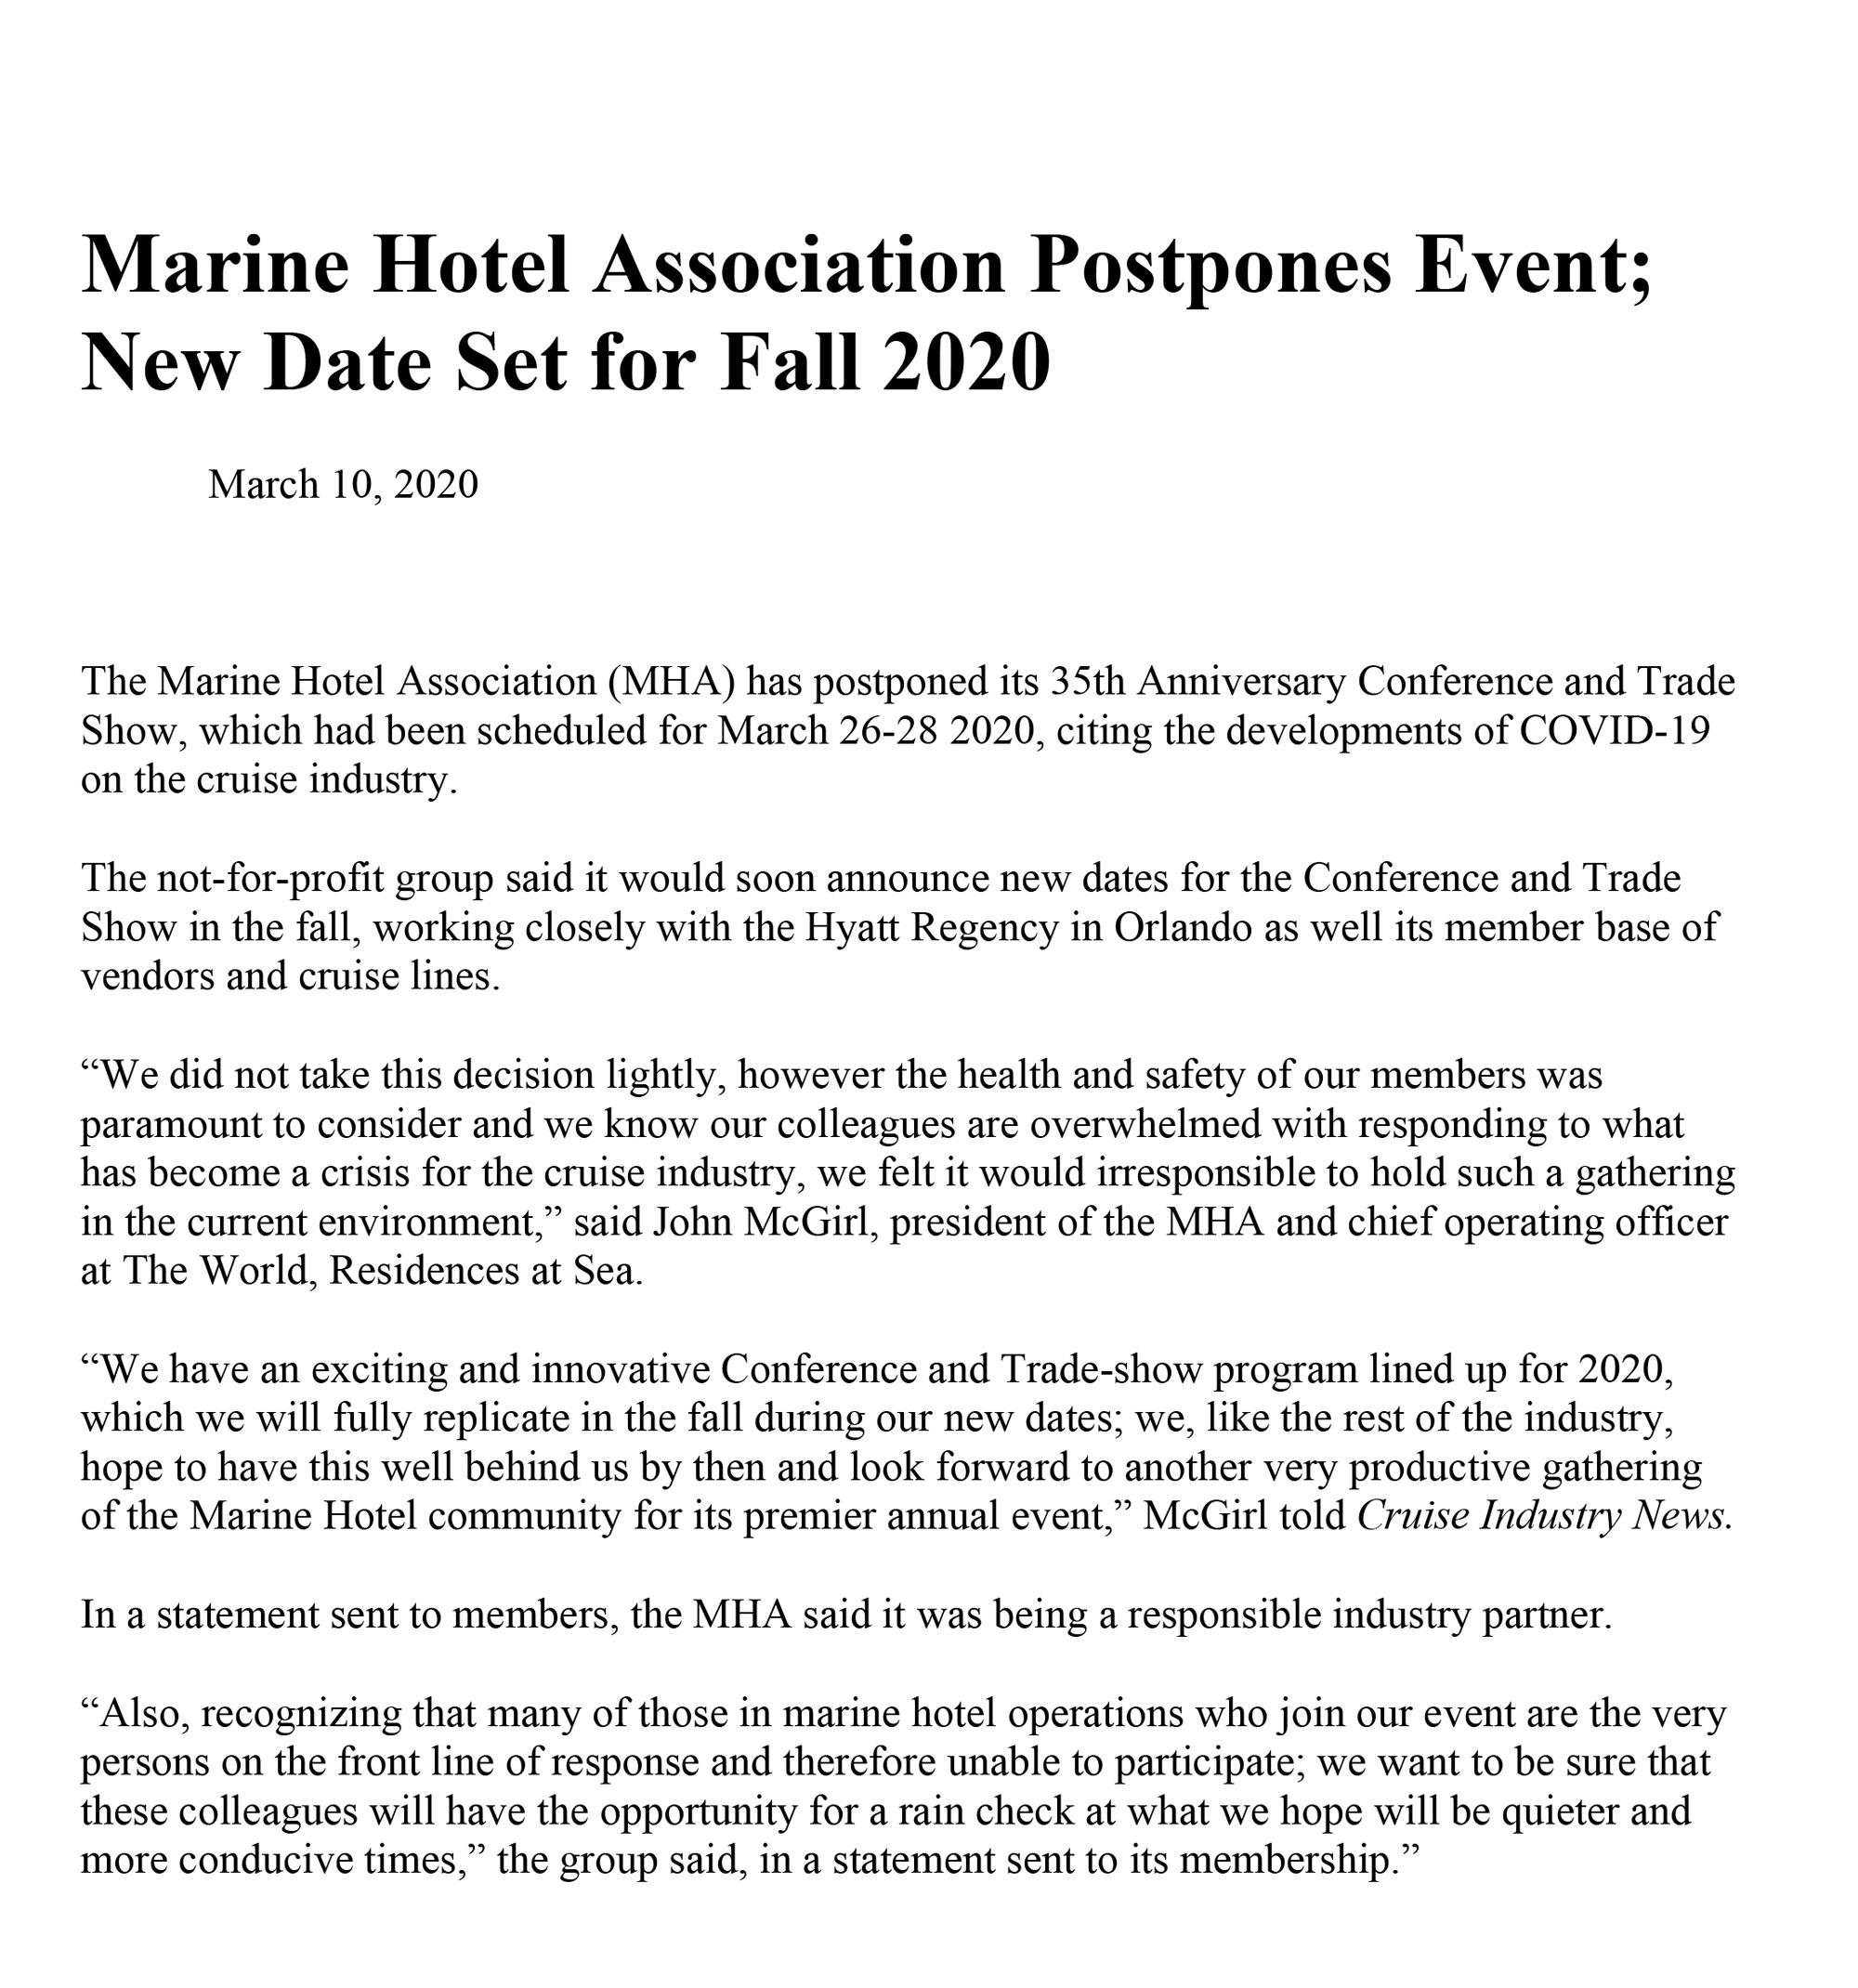 Marine Hotel Association Postpones 2020 Event